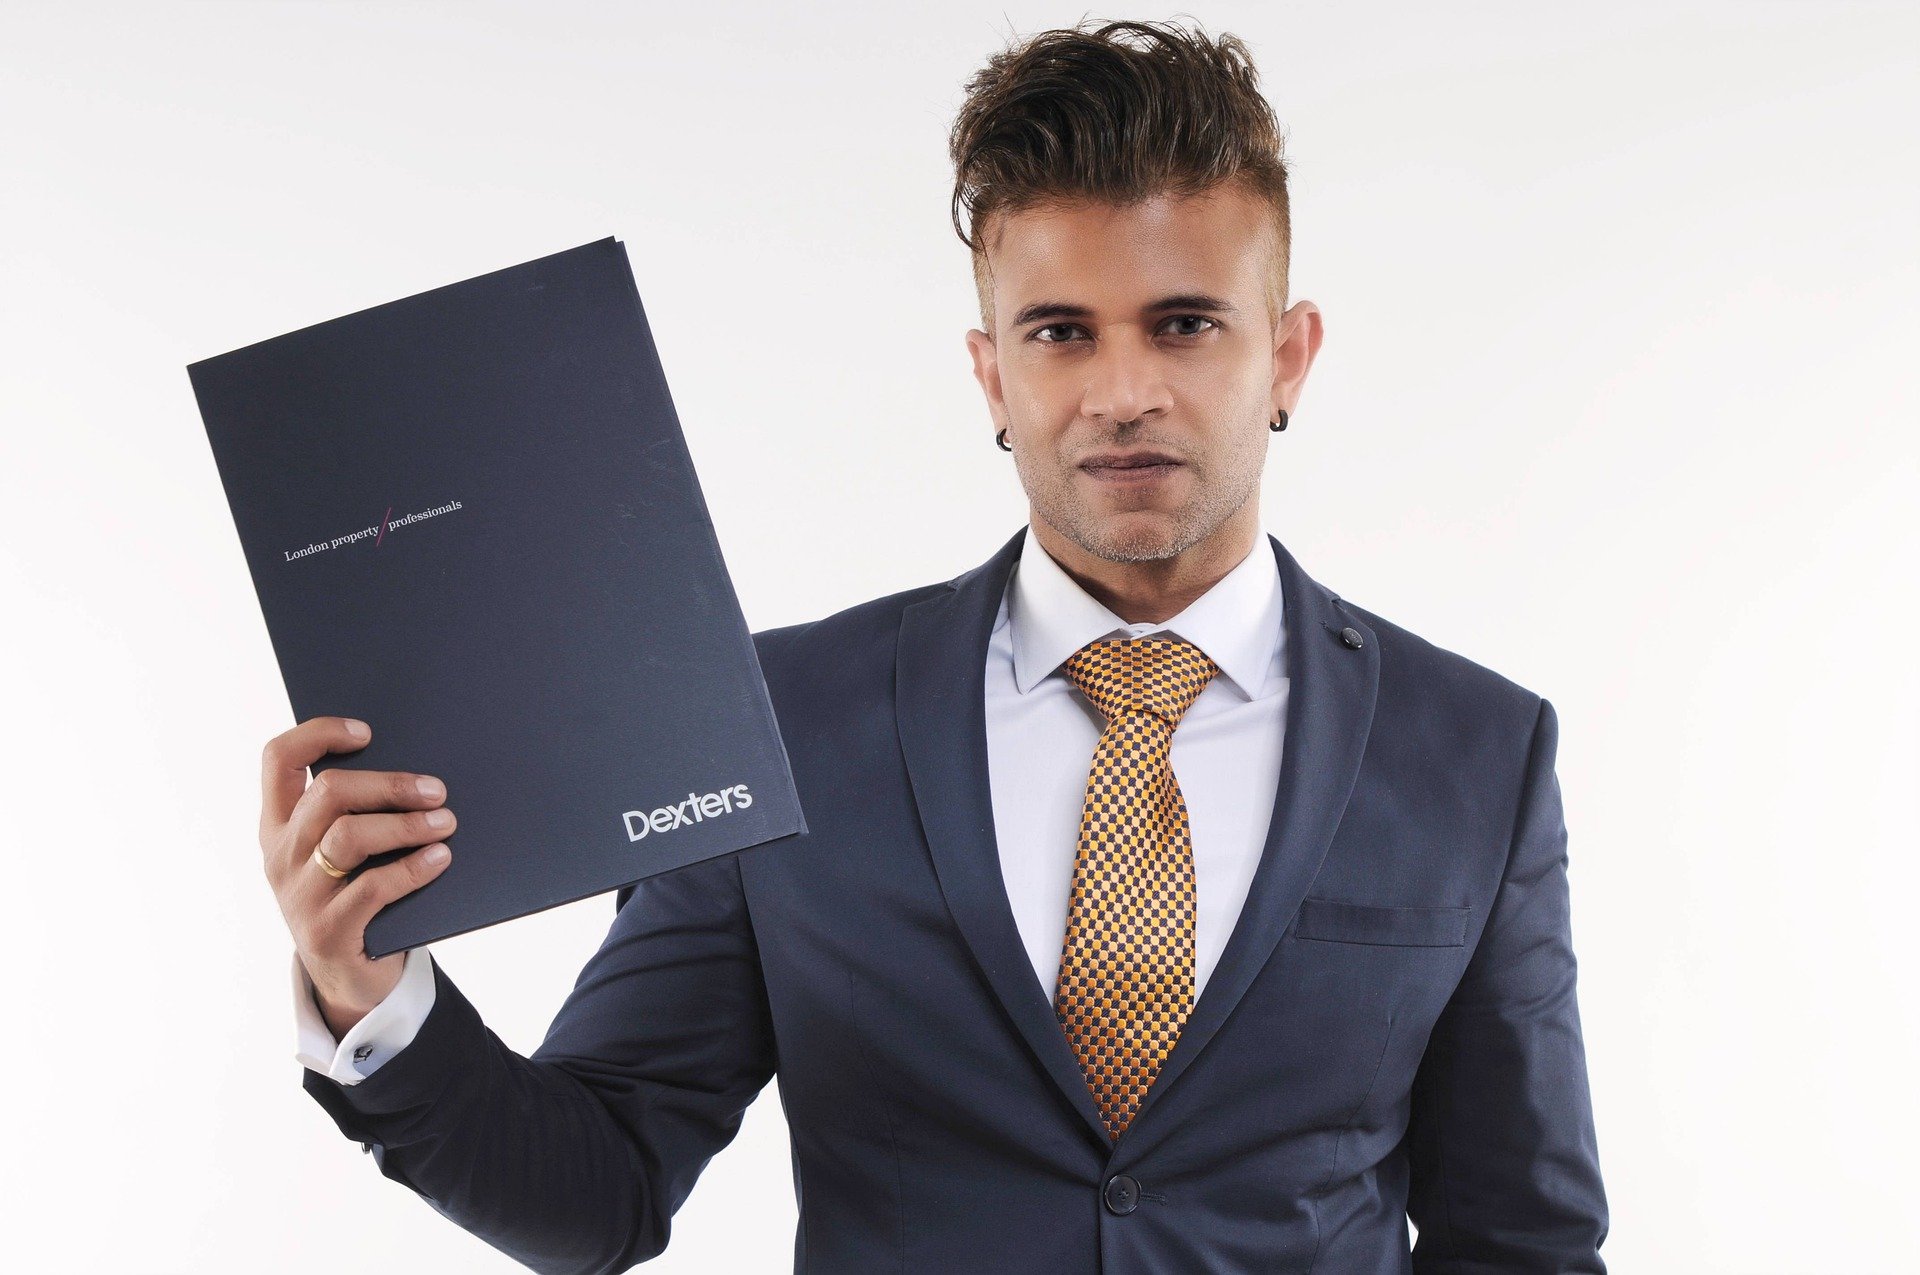 Businessman holding a folder